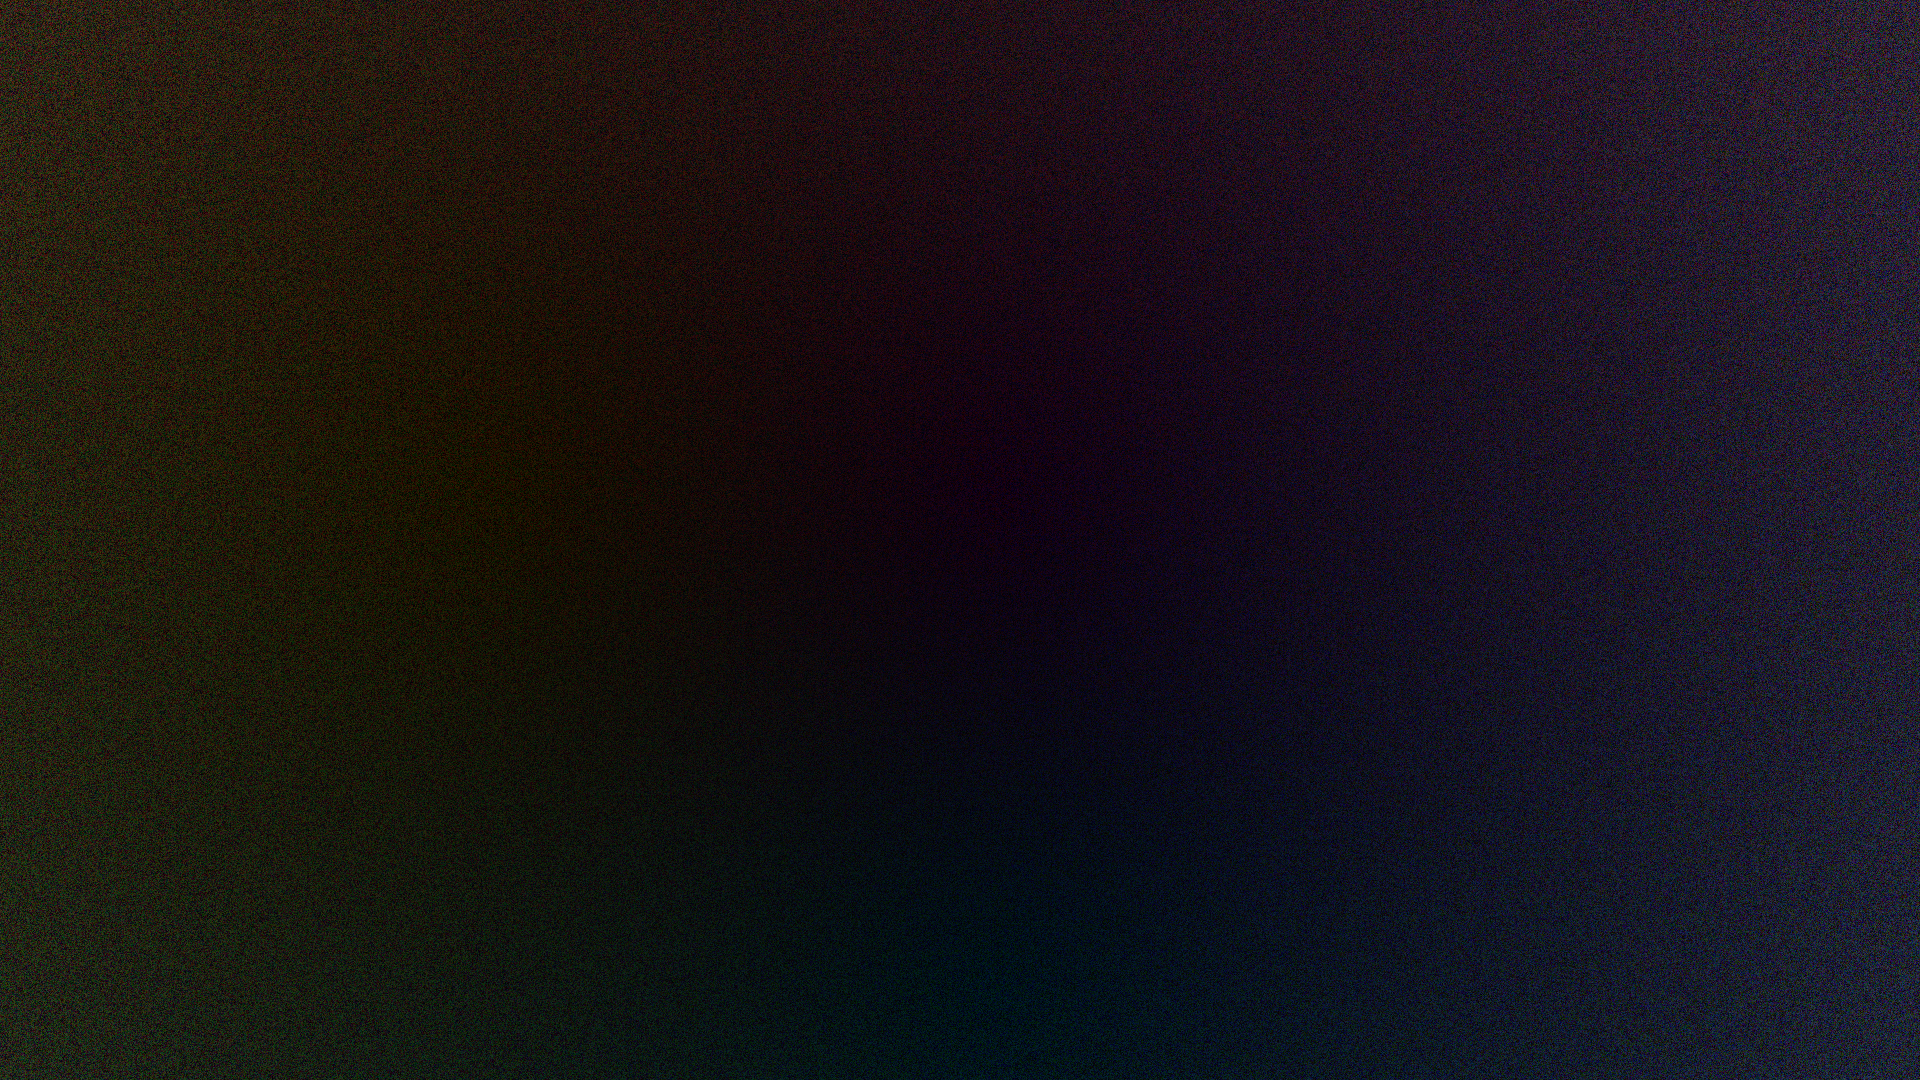 General 1920x1080 dark simple background pixels minimalism colorful